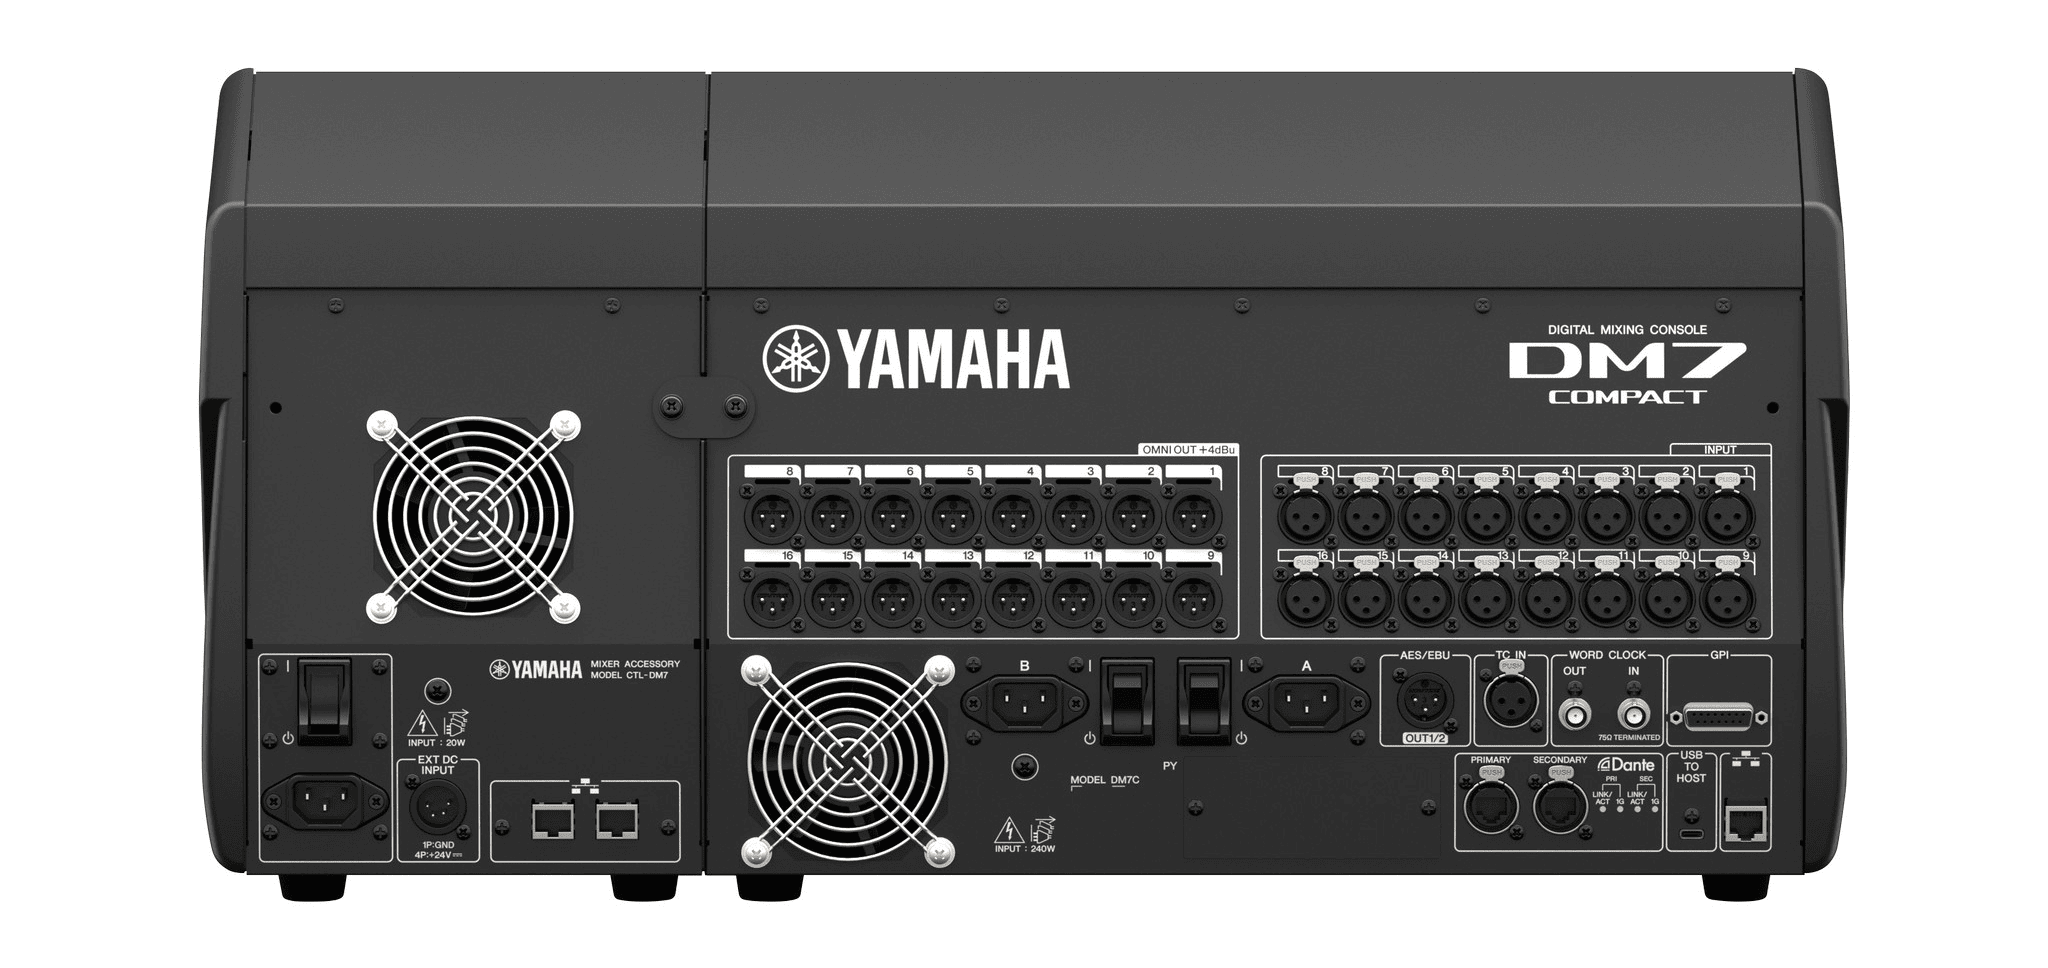 YAMAHA DM7-EX Compact